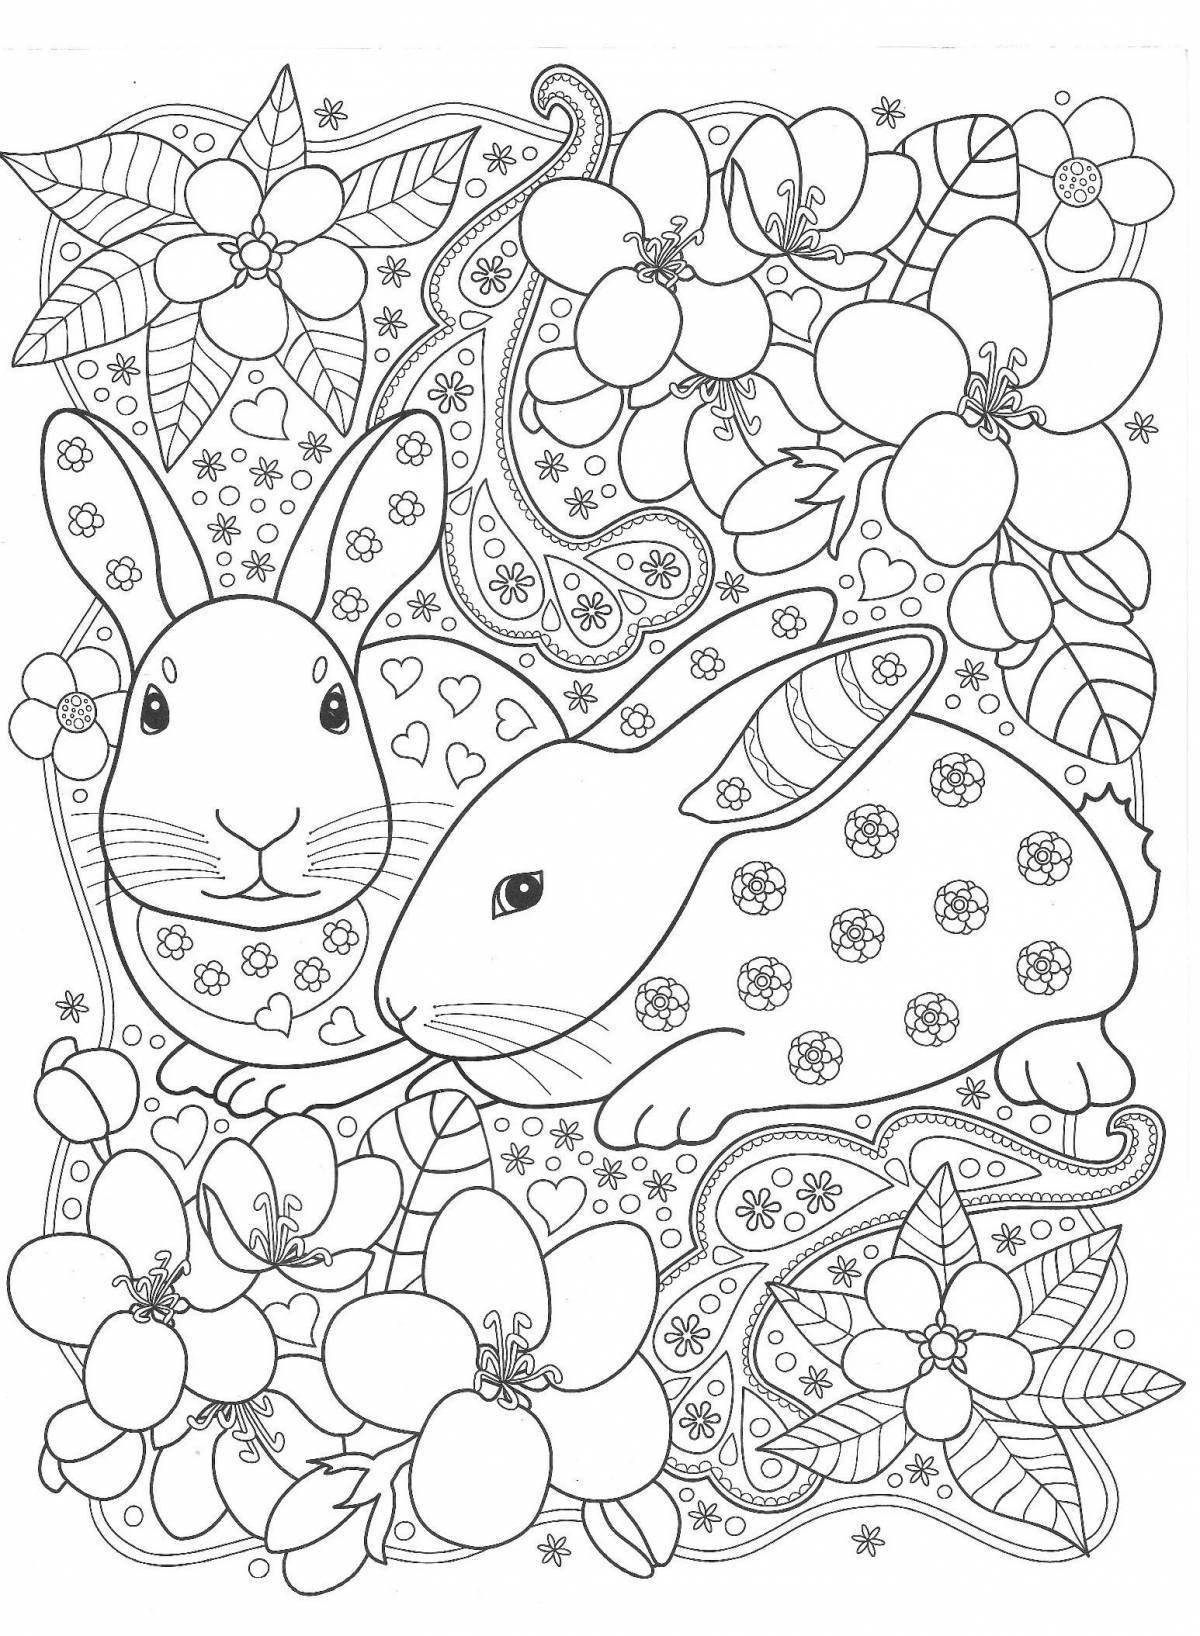 Fun anti-stress animal coloring book for kids